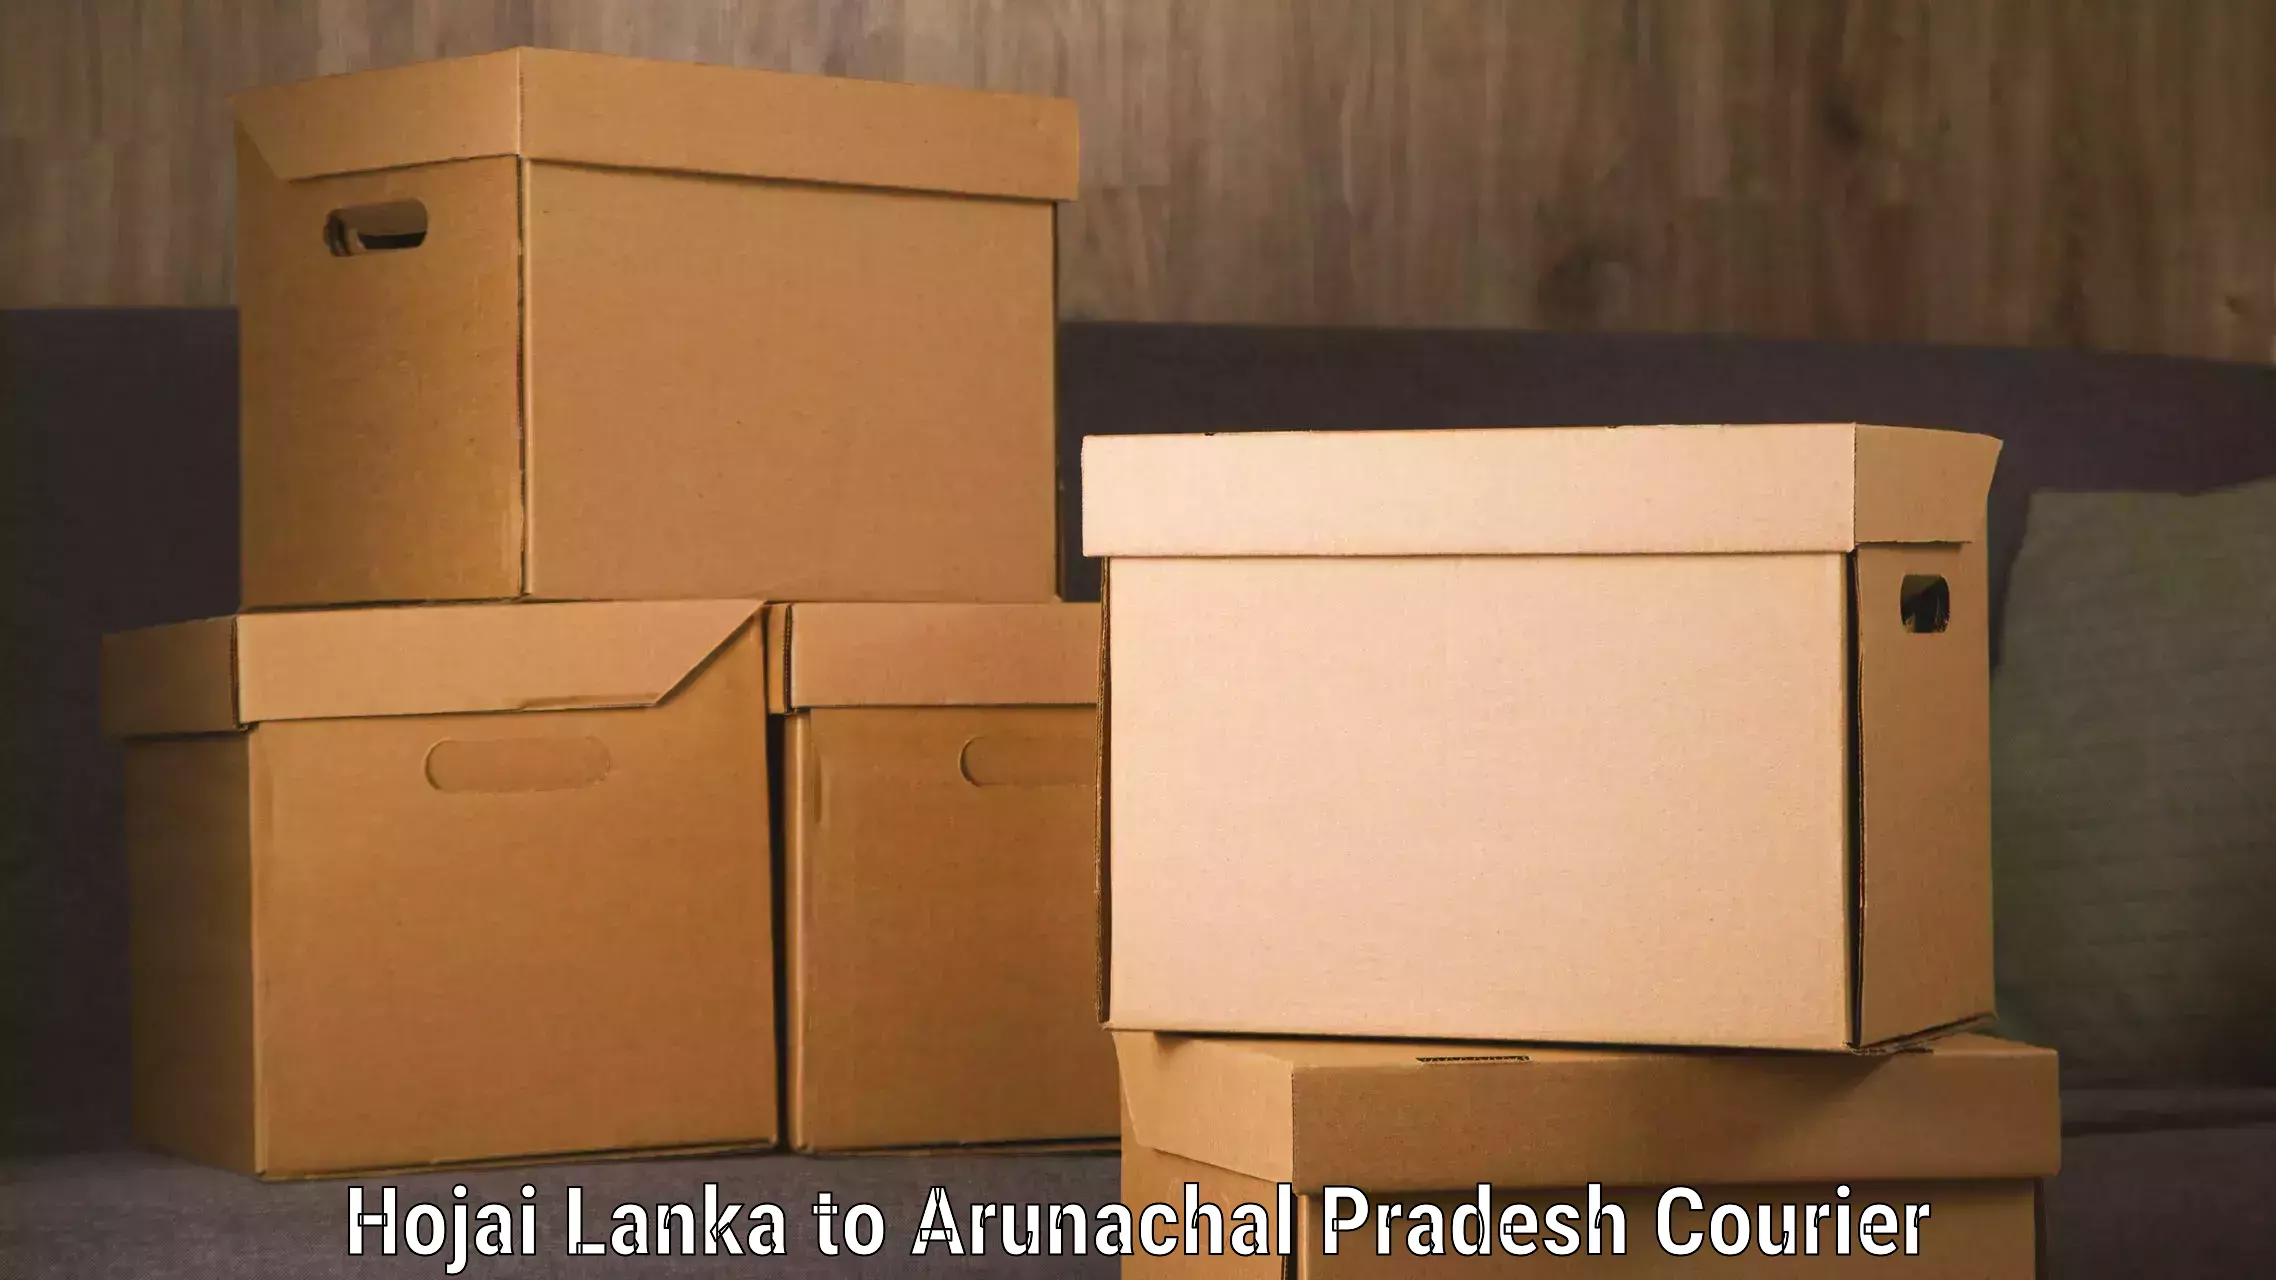 Luggage shipment tracking Hojai Lanka to Arunachal Pradesh